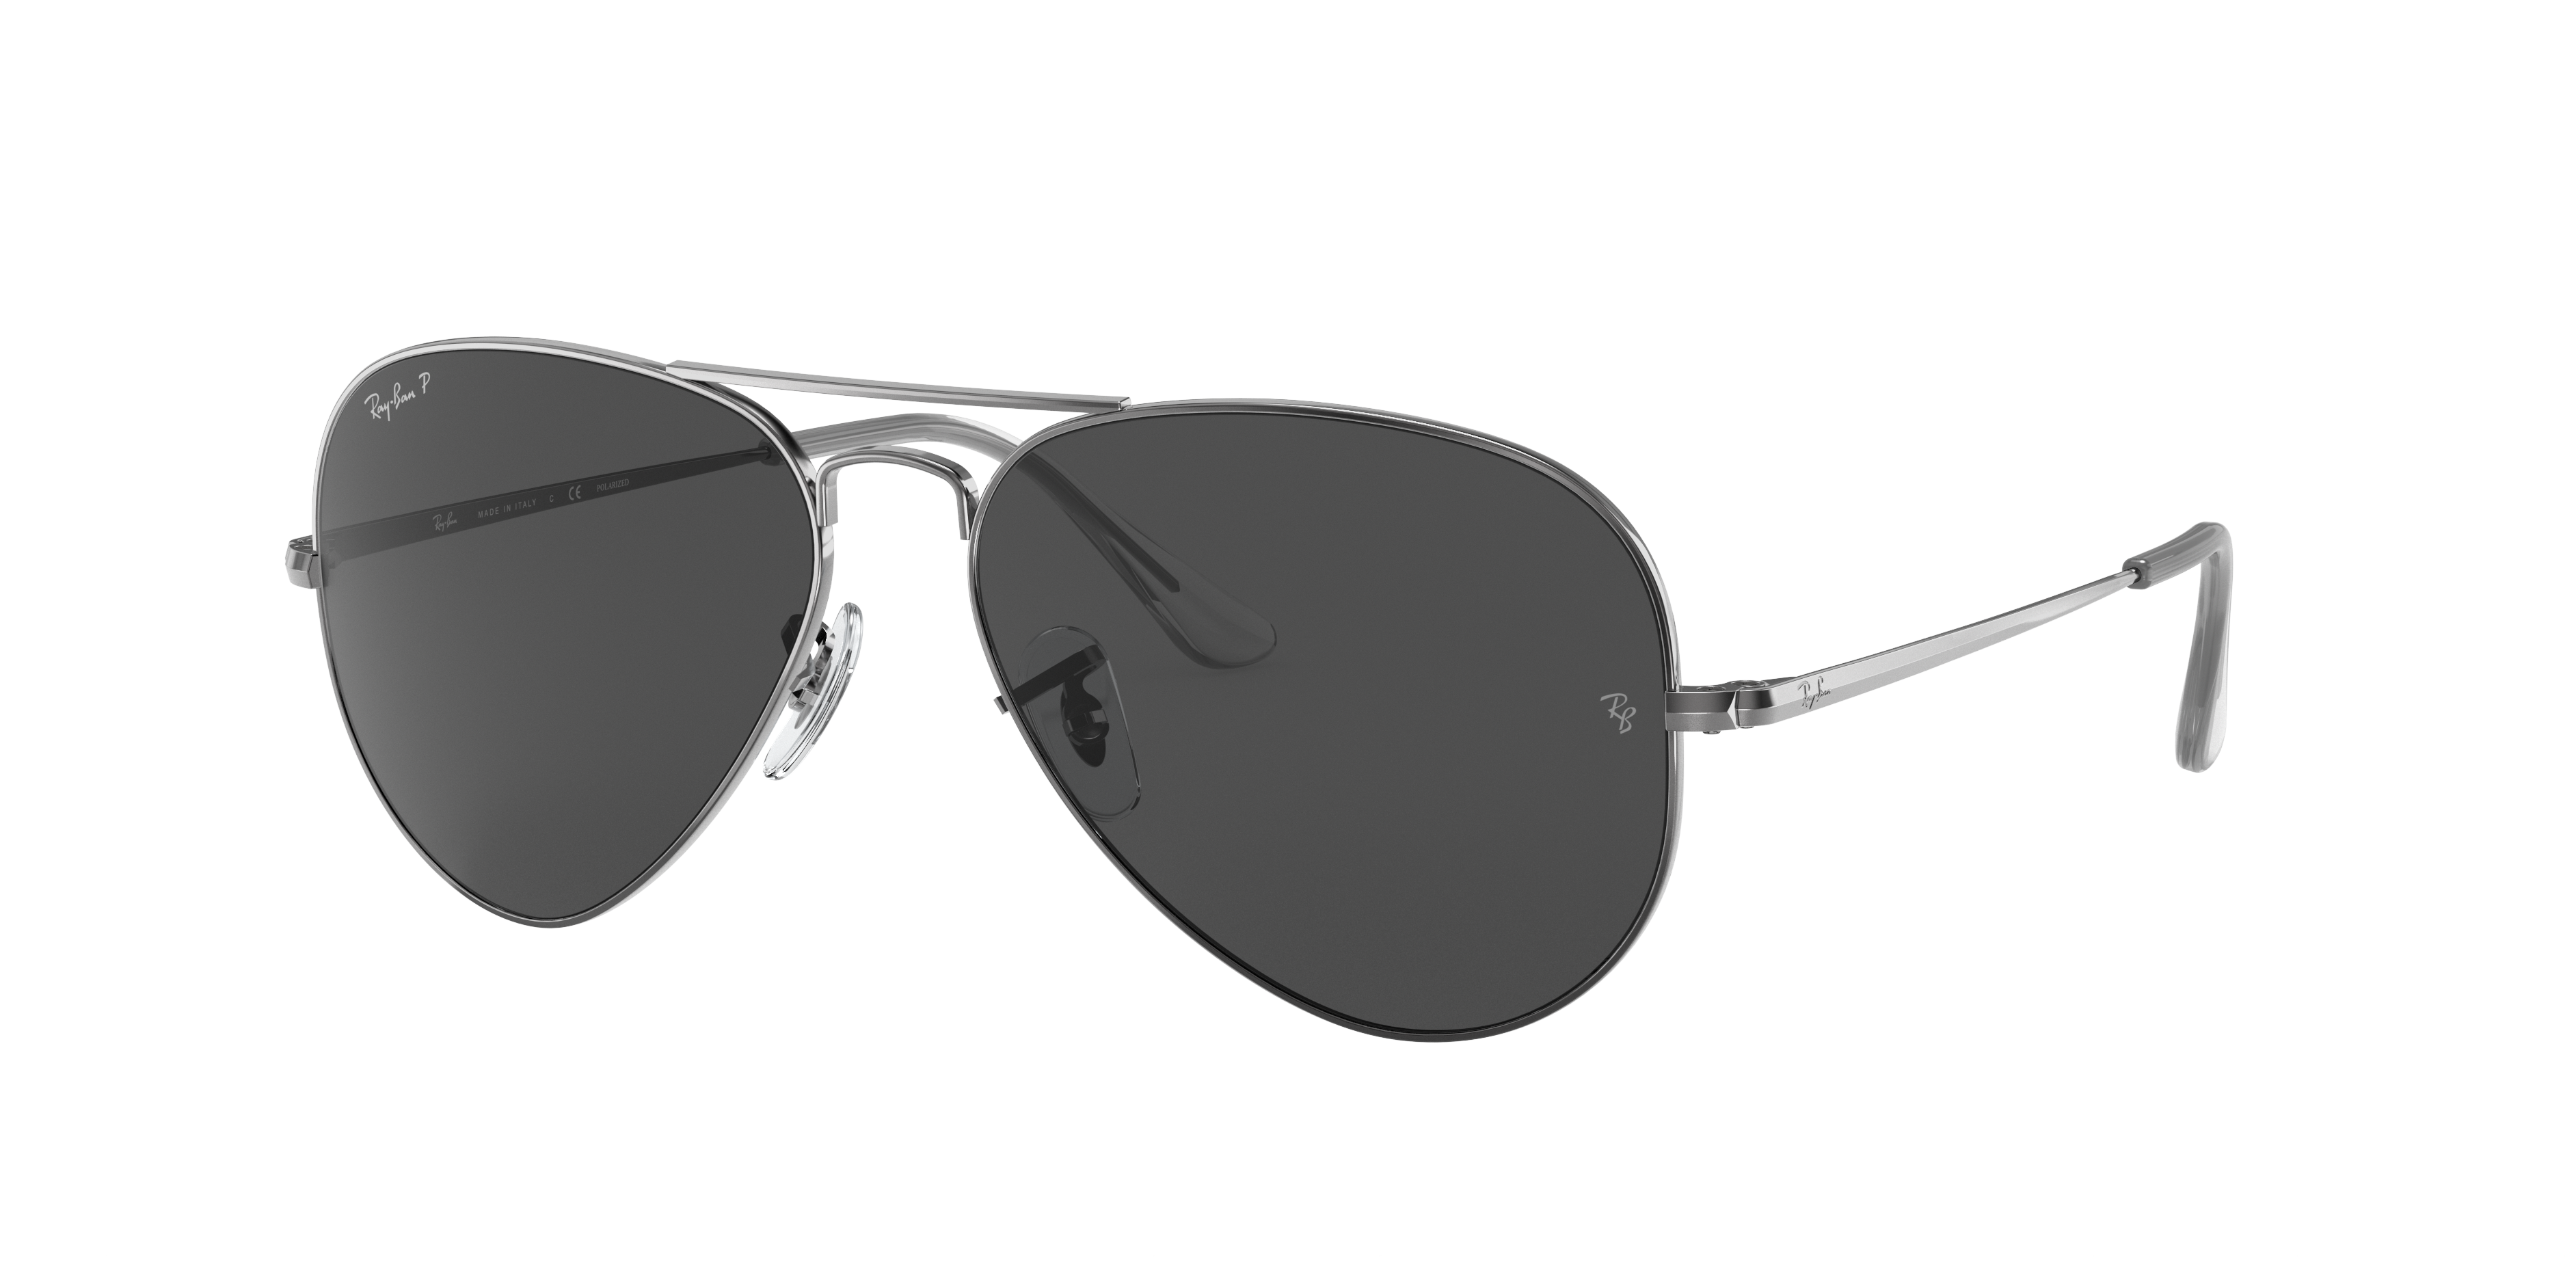 gat straf tolerantie Aviator Metal Ii Sunglasses in Gunmetal and Black | Ray-Ban®